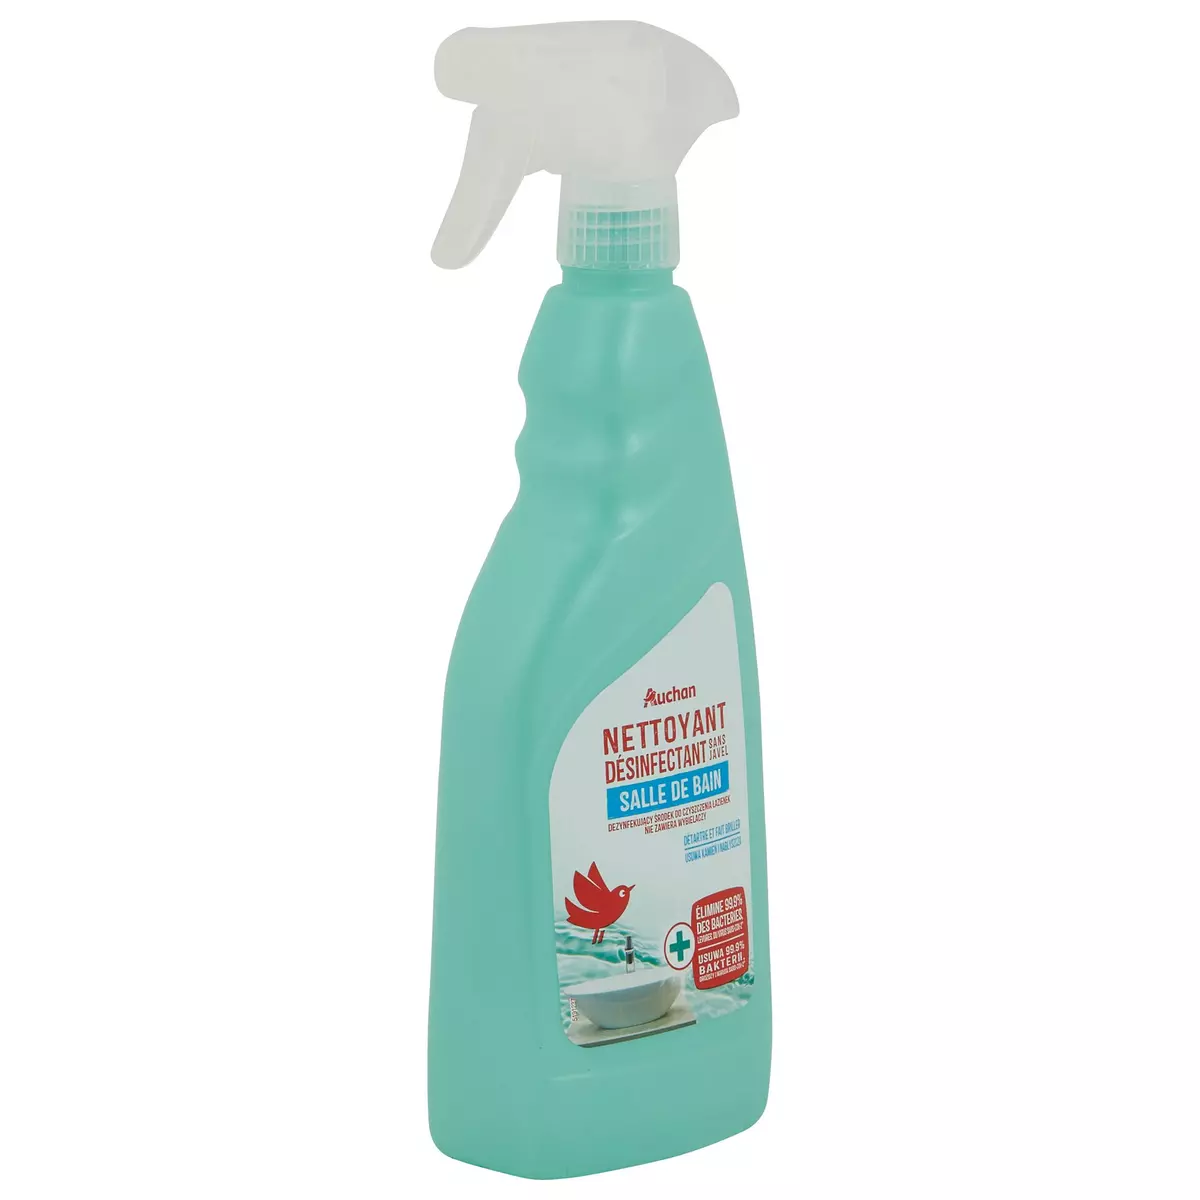 AUCHAN Spray nettoyant désinfectant salle de bain sans javel 750ml